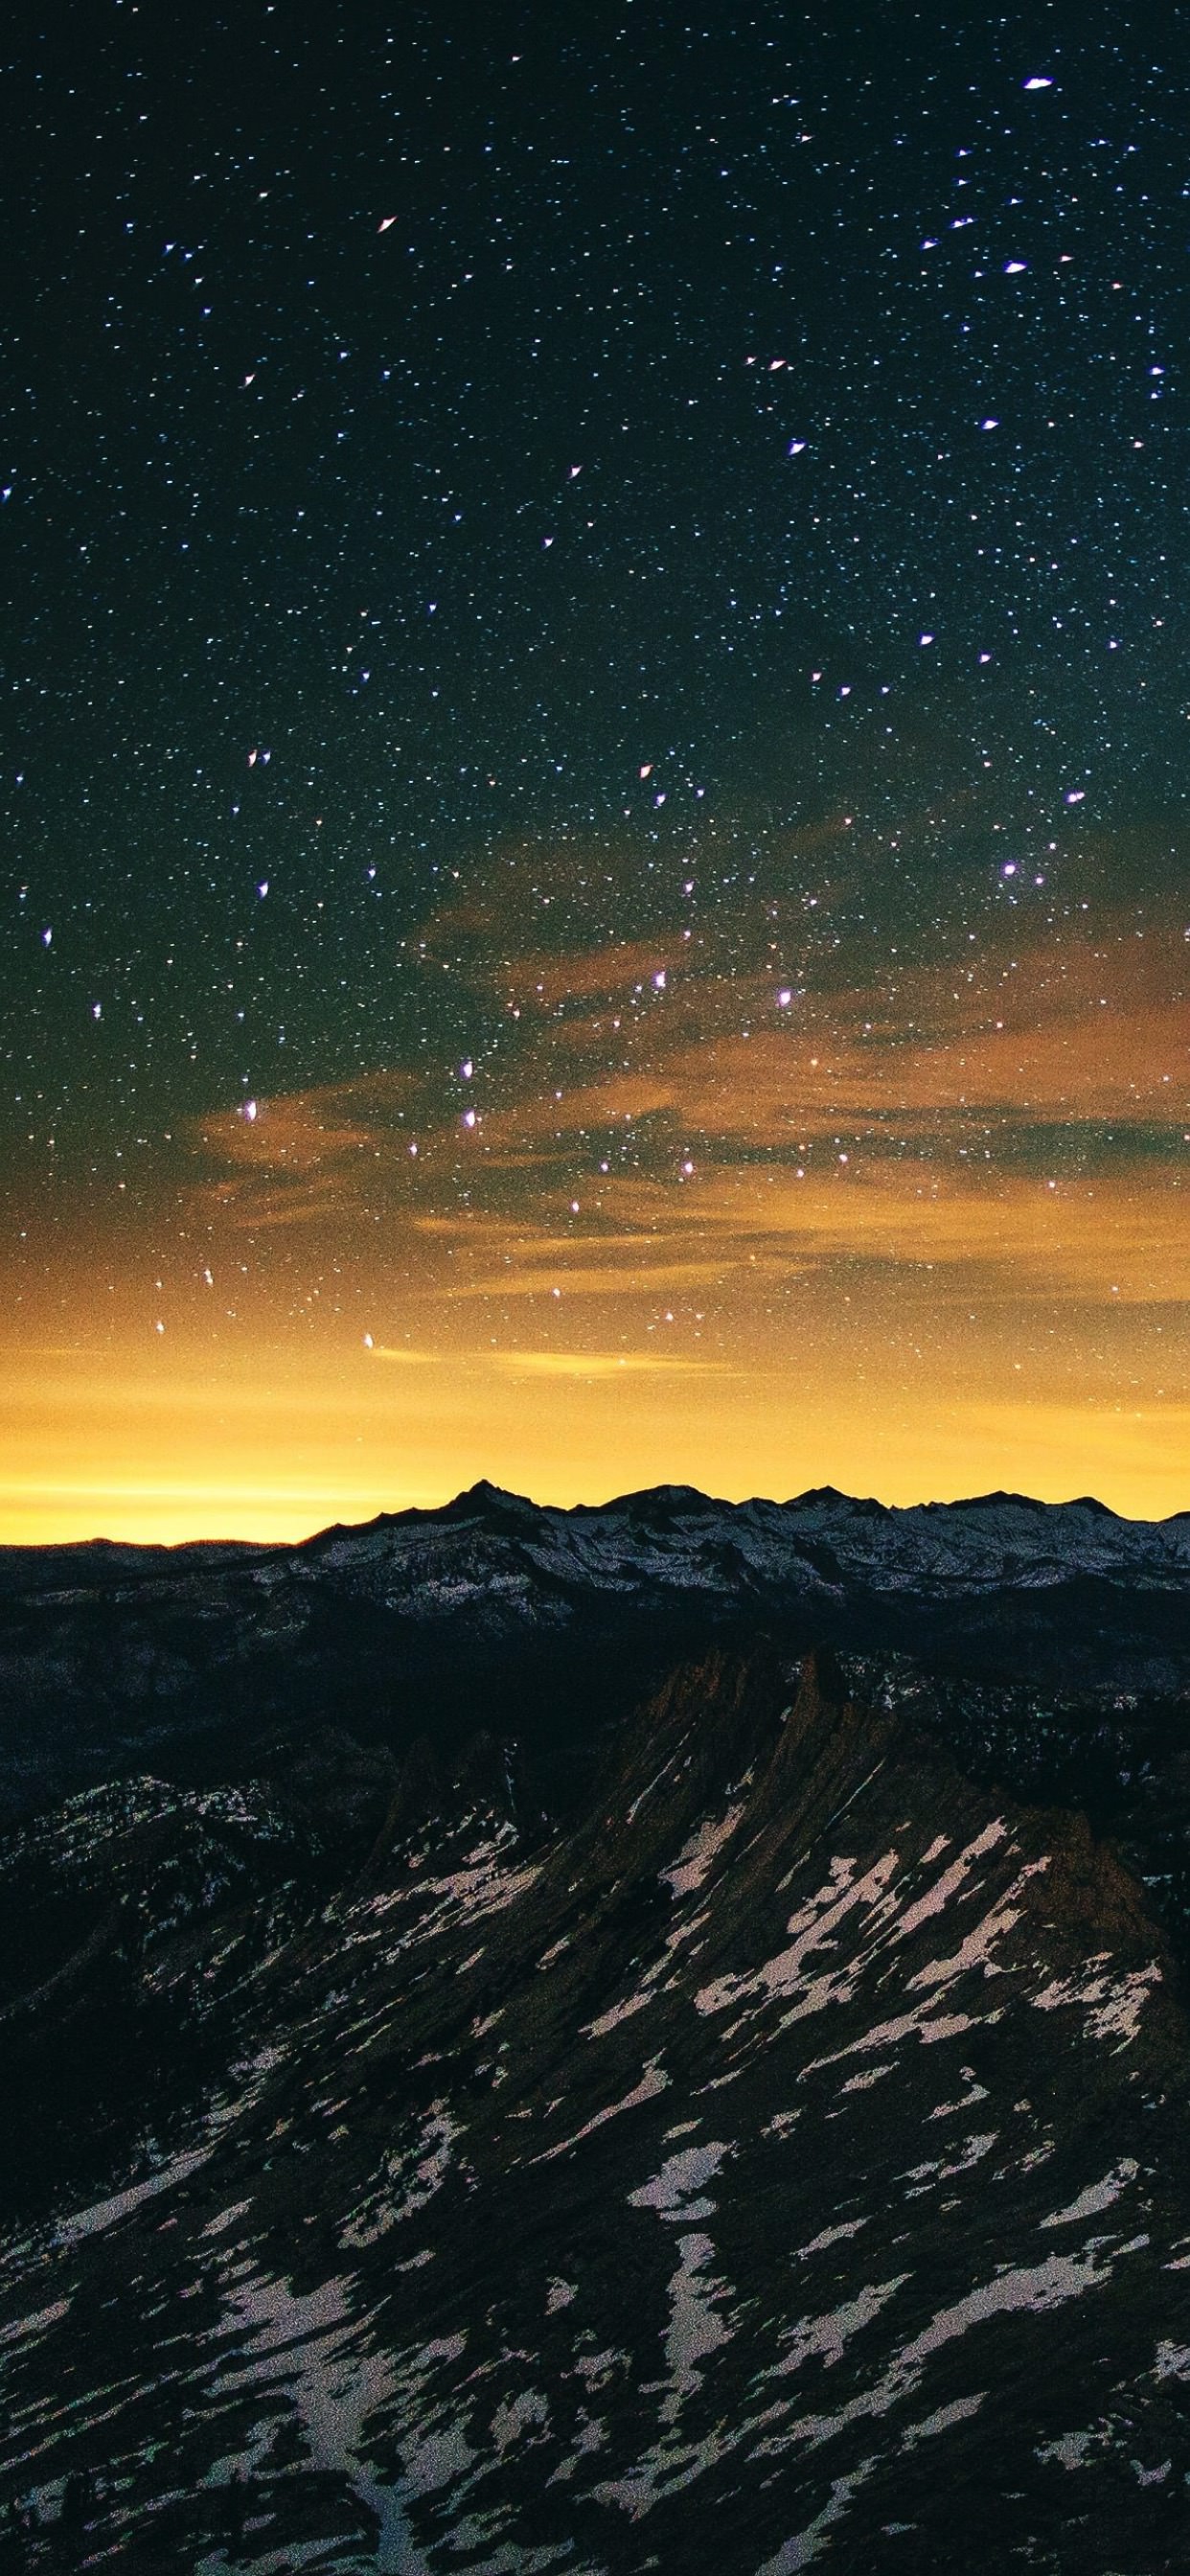 Mountain landscape night sky. wallpaper.sc iPhone XS Max